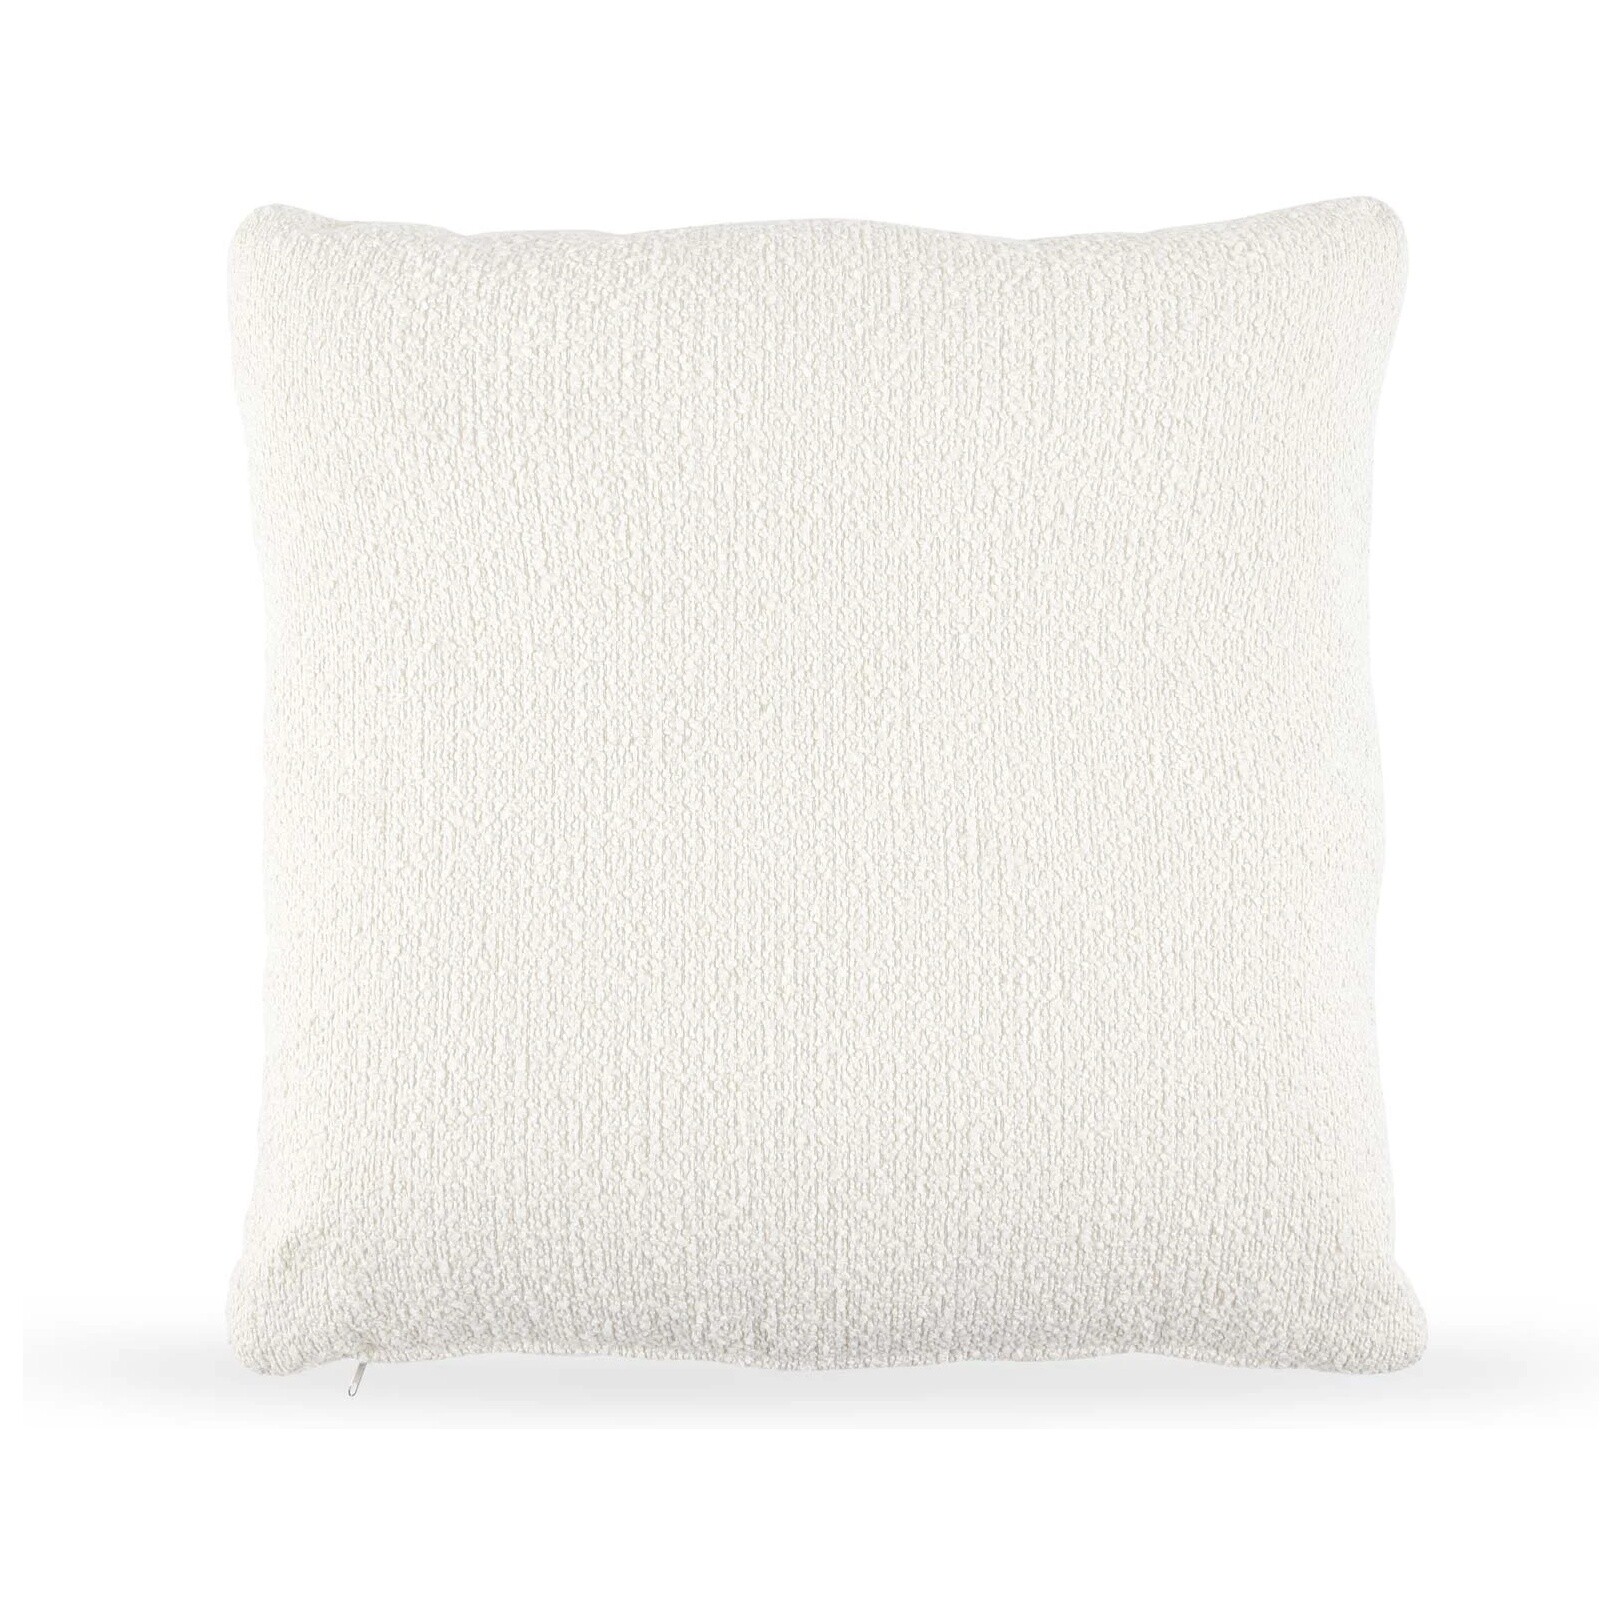 Подушка квадратная 70 см ткань Buckle white белая Fabro